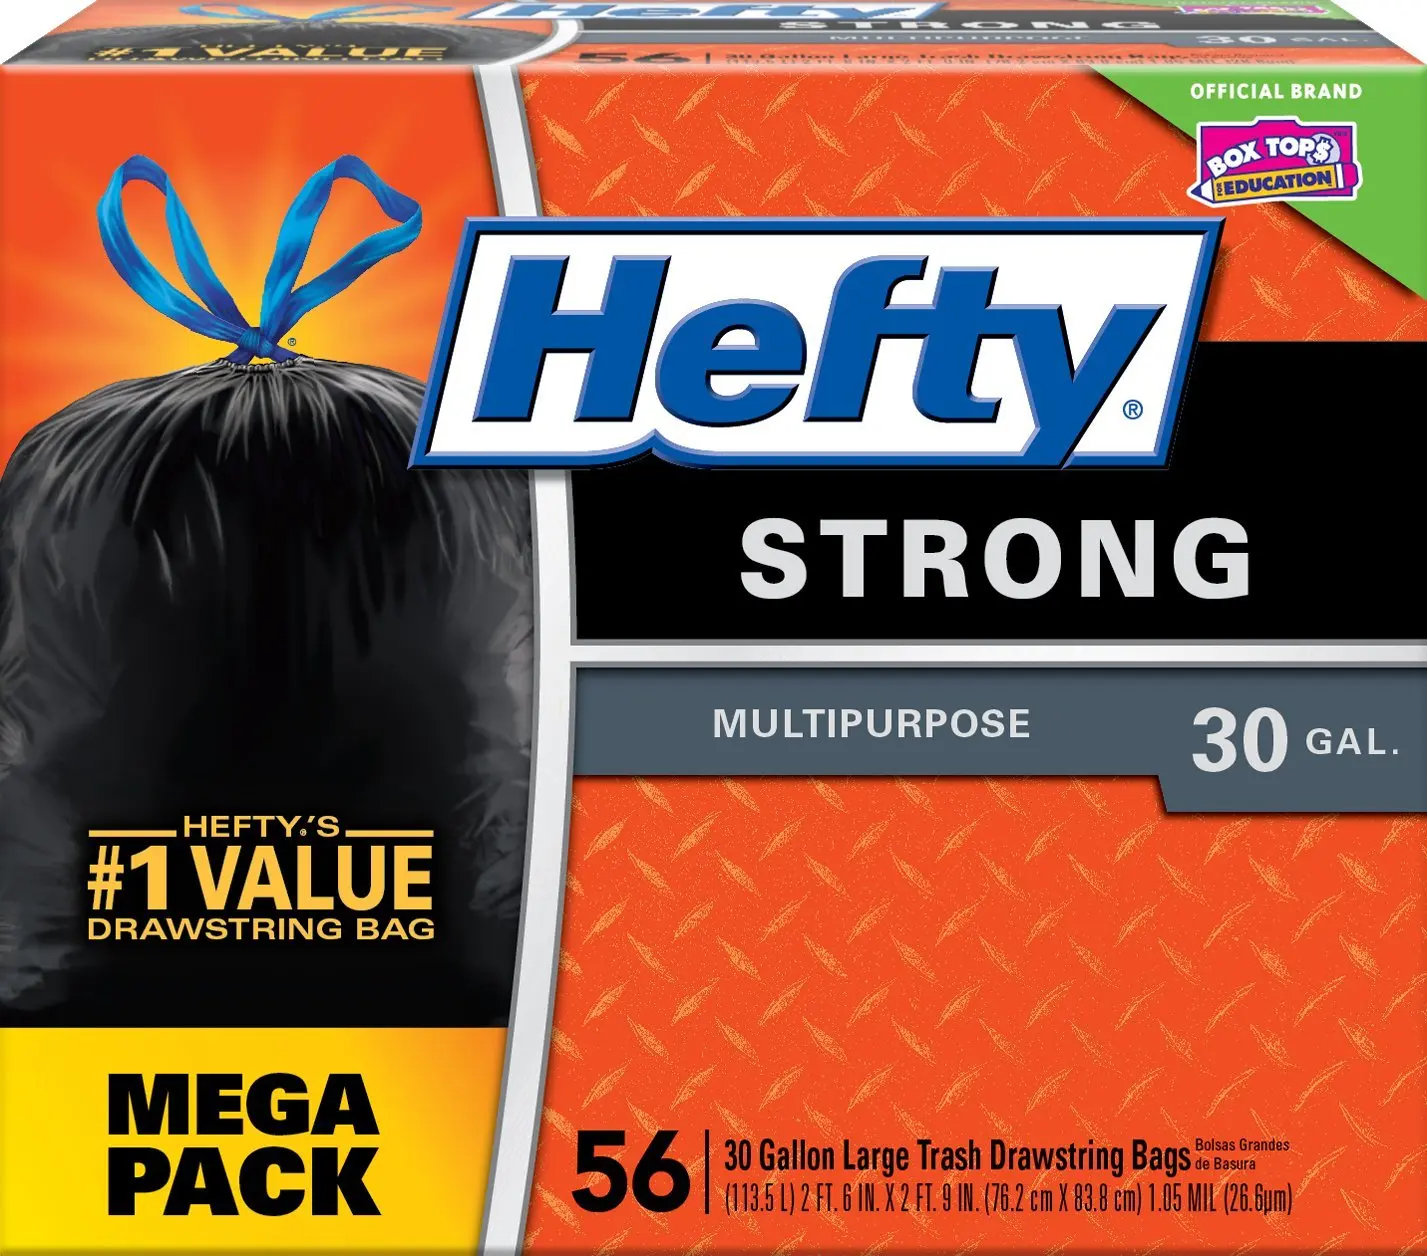 12.99. Hefty Strong Large Trash Bags (Multipurpose, Drawstring, 30 Gallon, ...